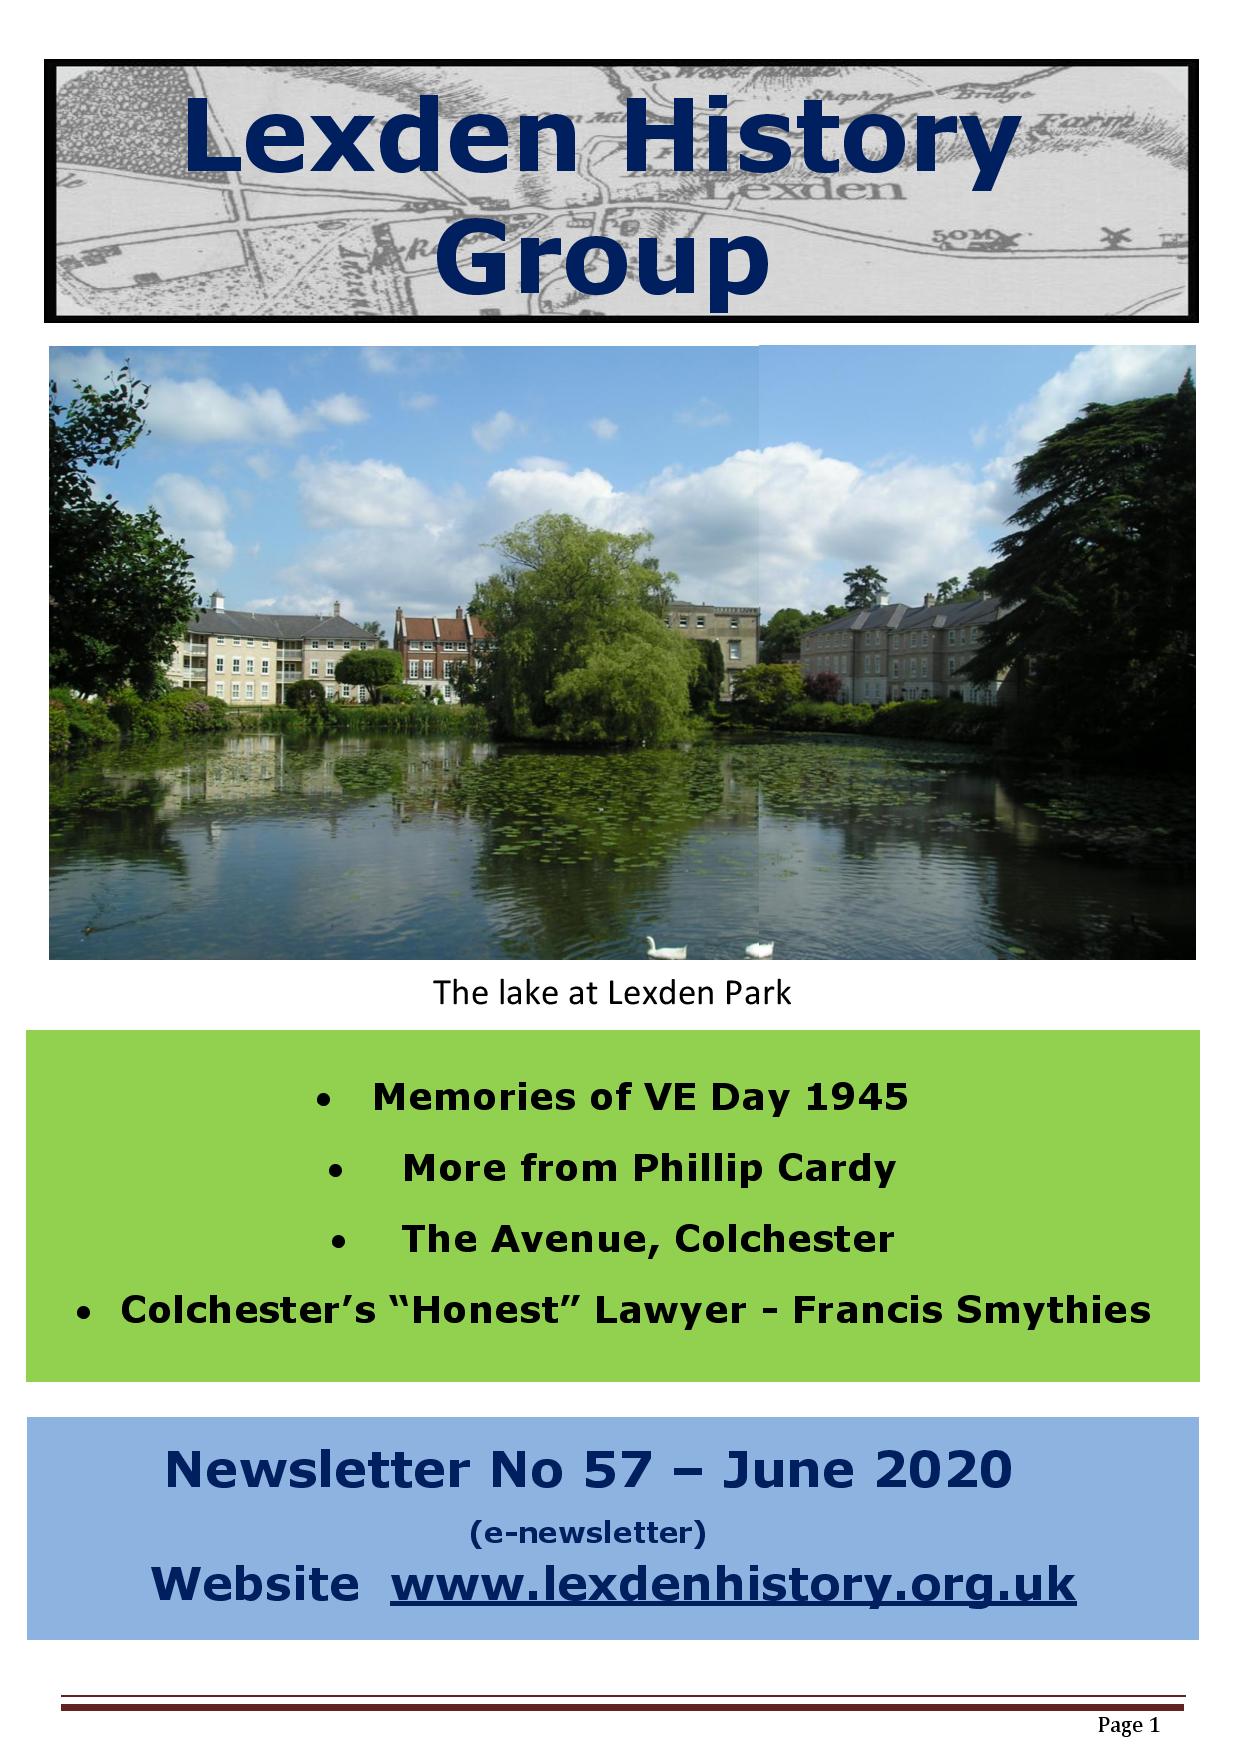 Lexden history Group Newsletter, June 2020 Issue 57